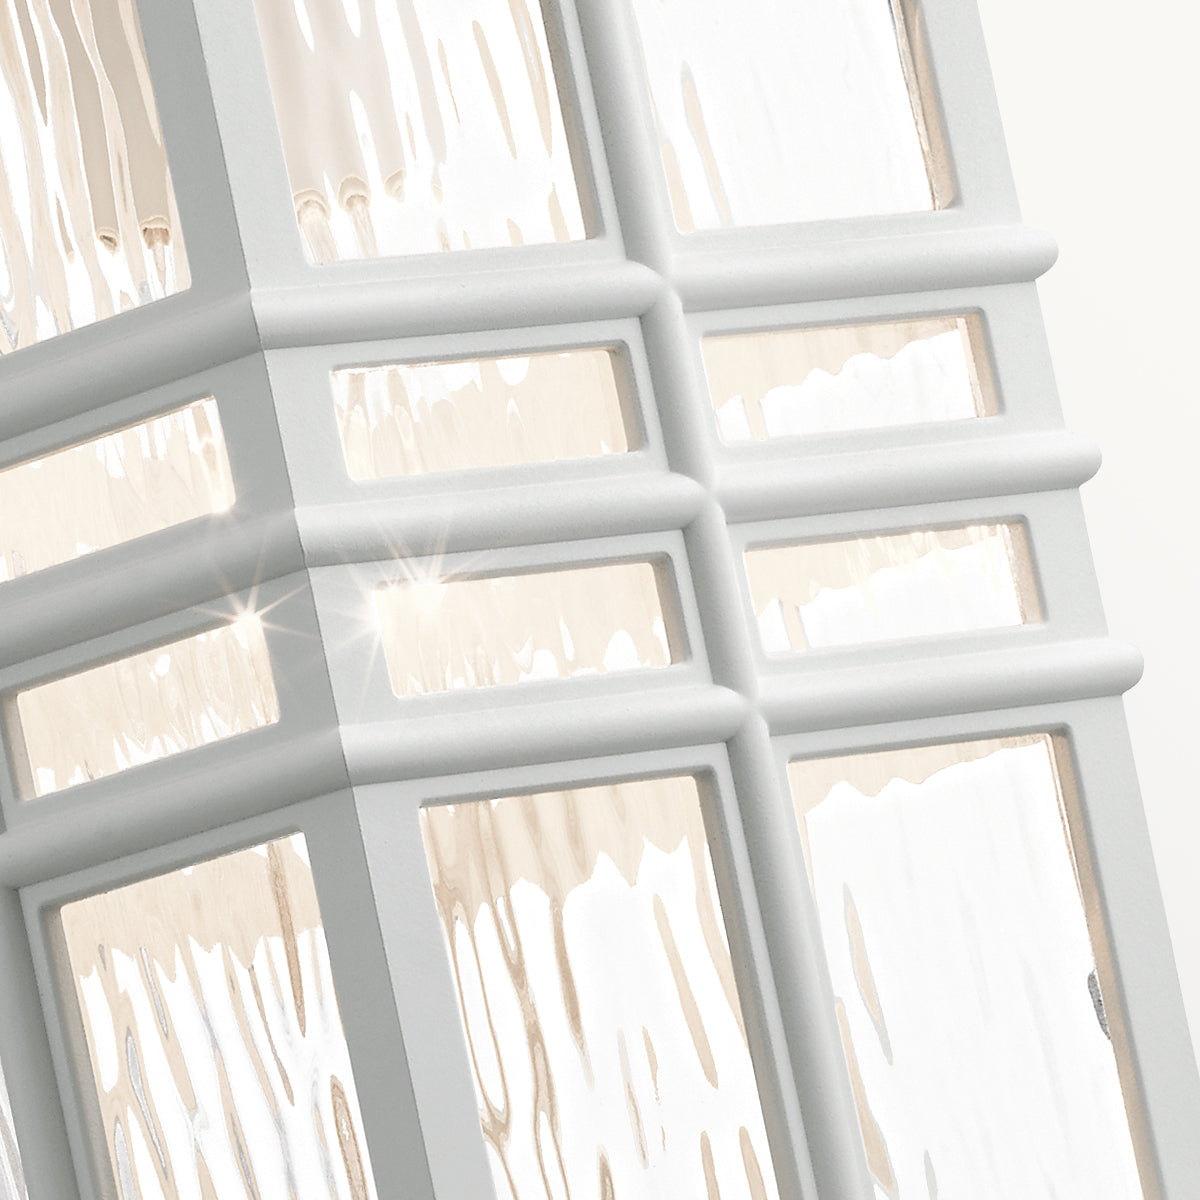 Beacon Square Medium Wall Lantern – White Finish